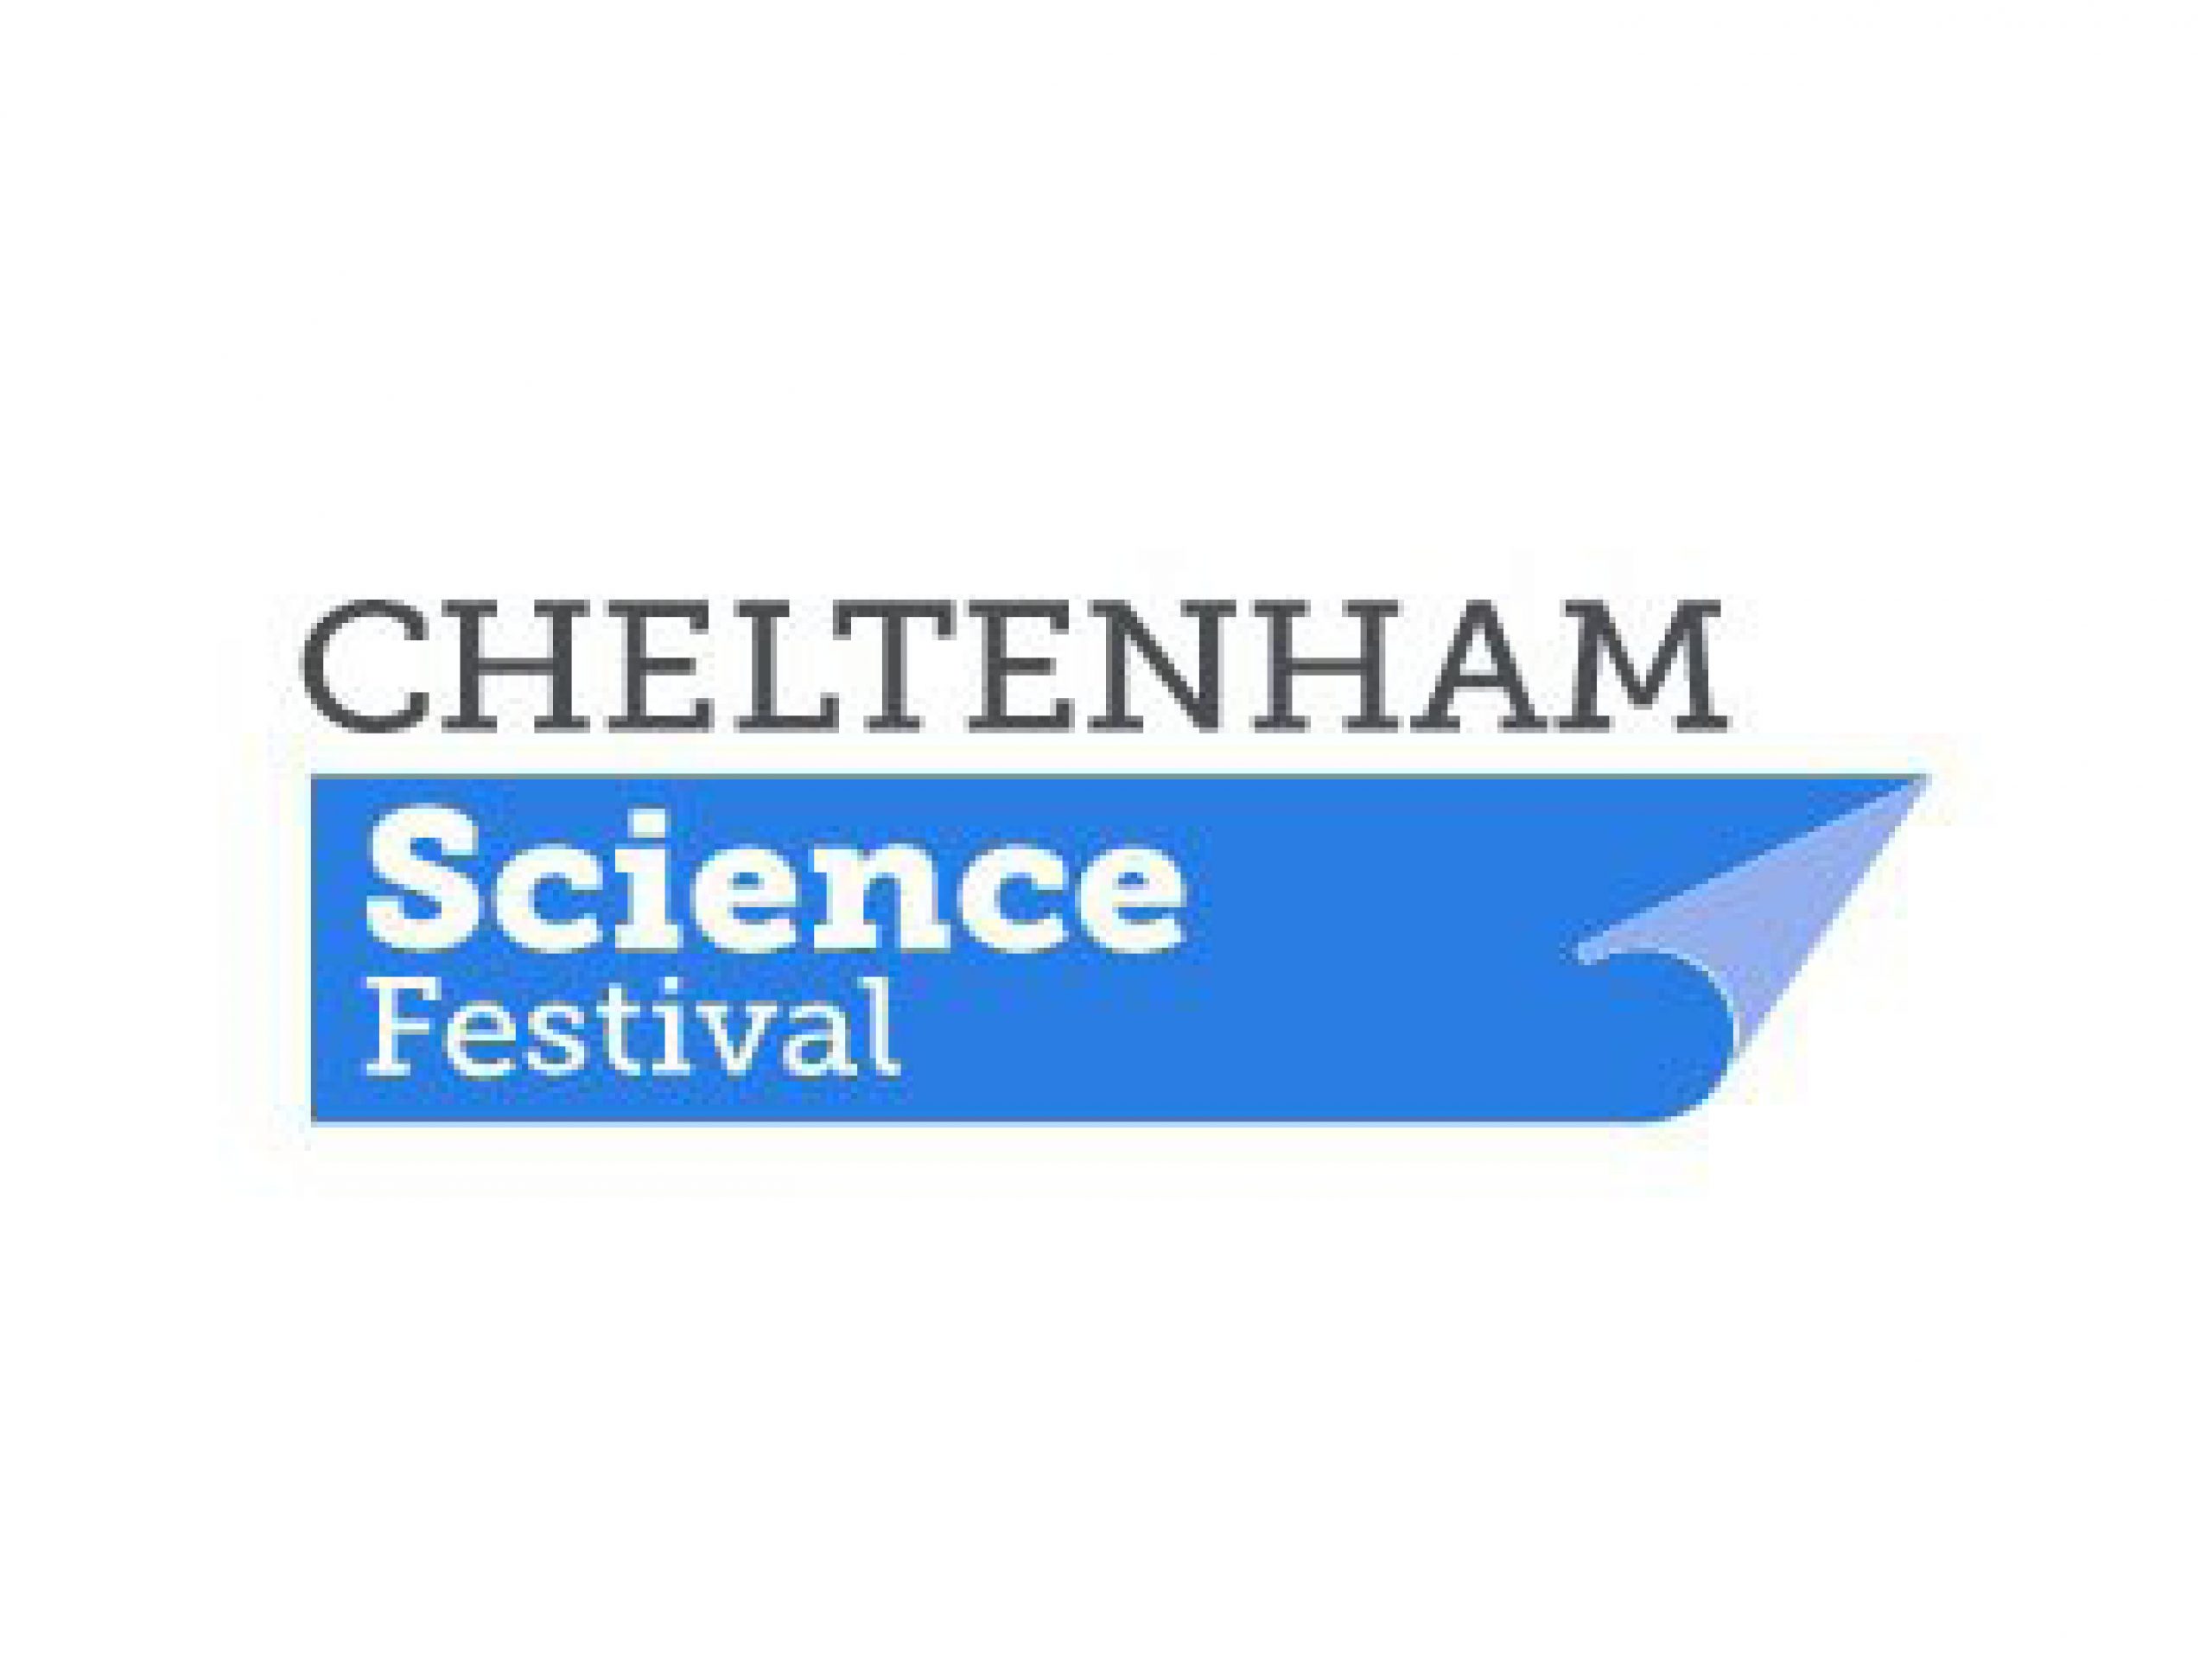 Discover Materials at Cheltenham Science Festival